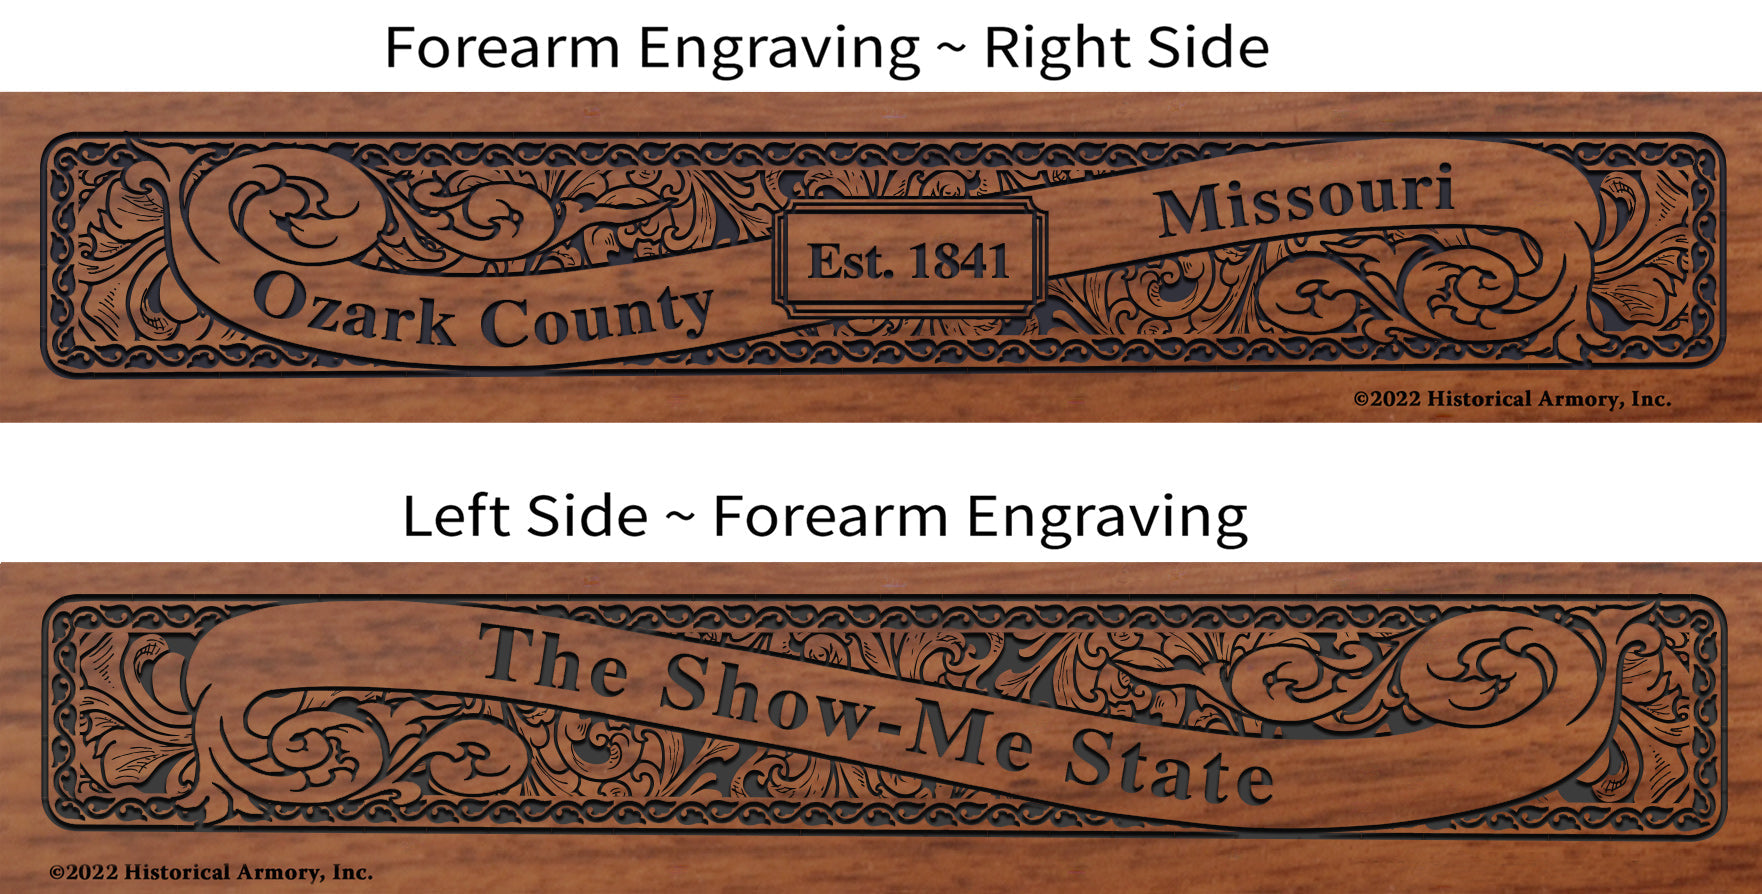 Ozark County Missouri Engraved Rifle Forearm